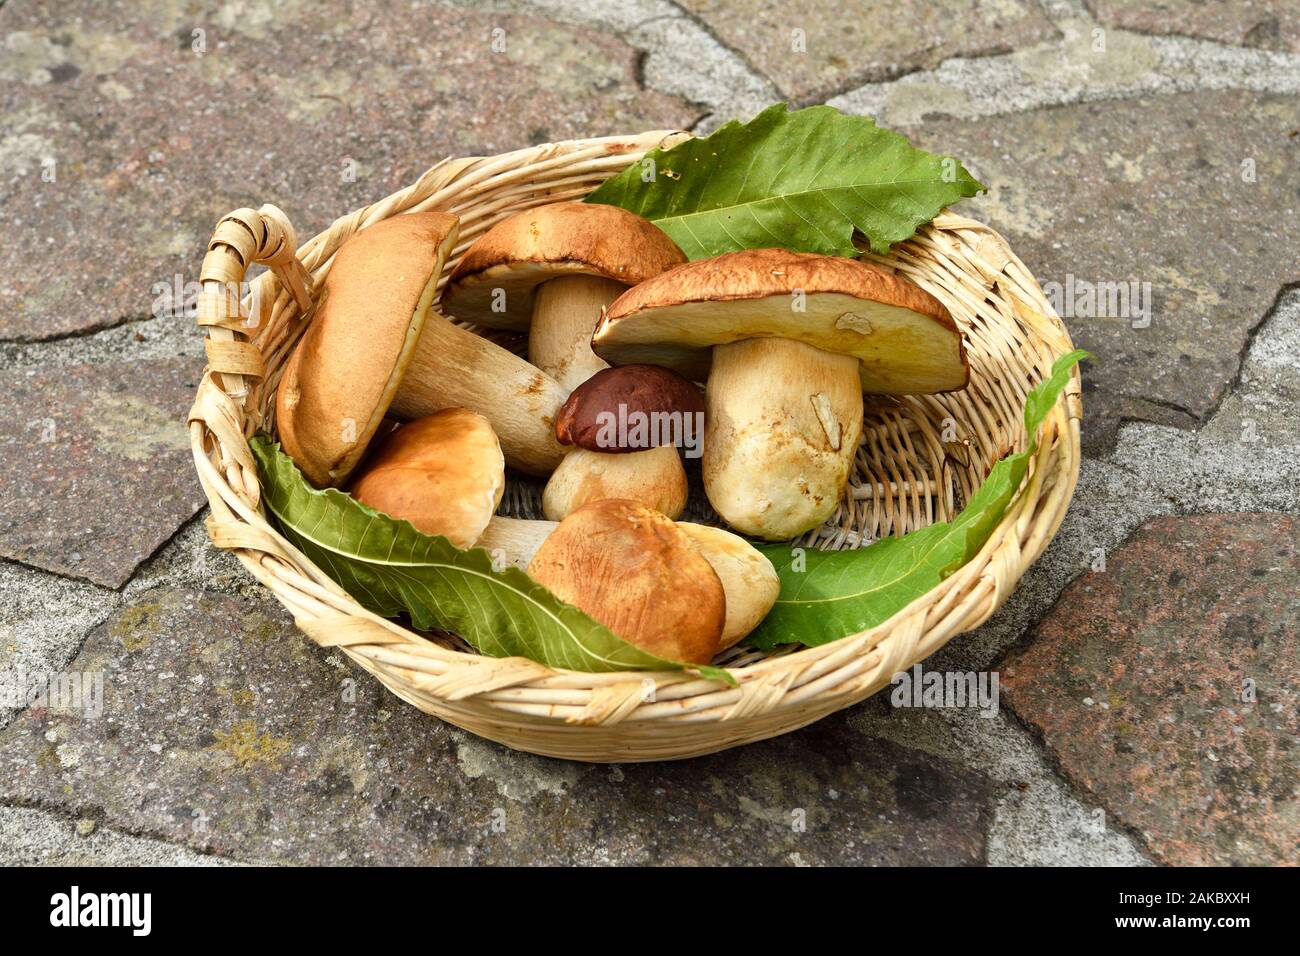 Italy, Liguria, La Spezia province, mountain village of Varese Ligure, Albergo Amici, morning picking mushrooms Stock Photo